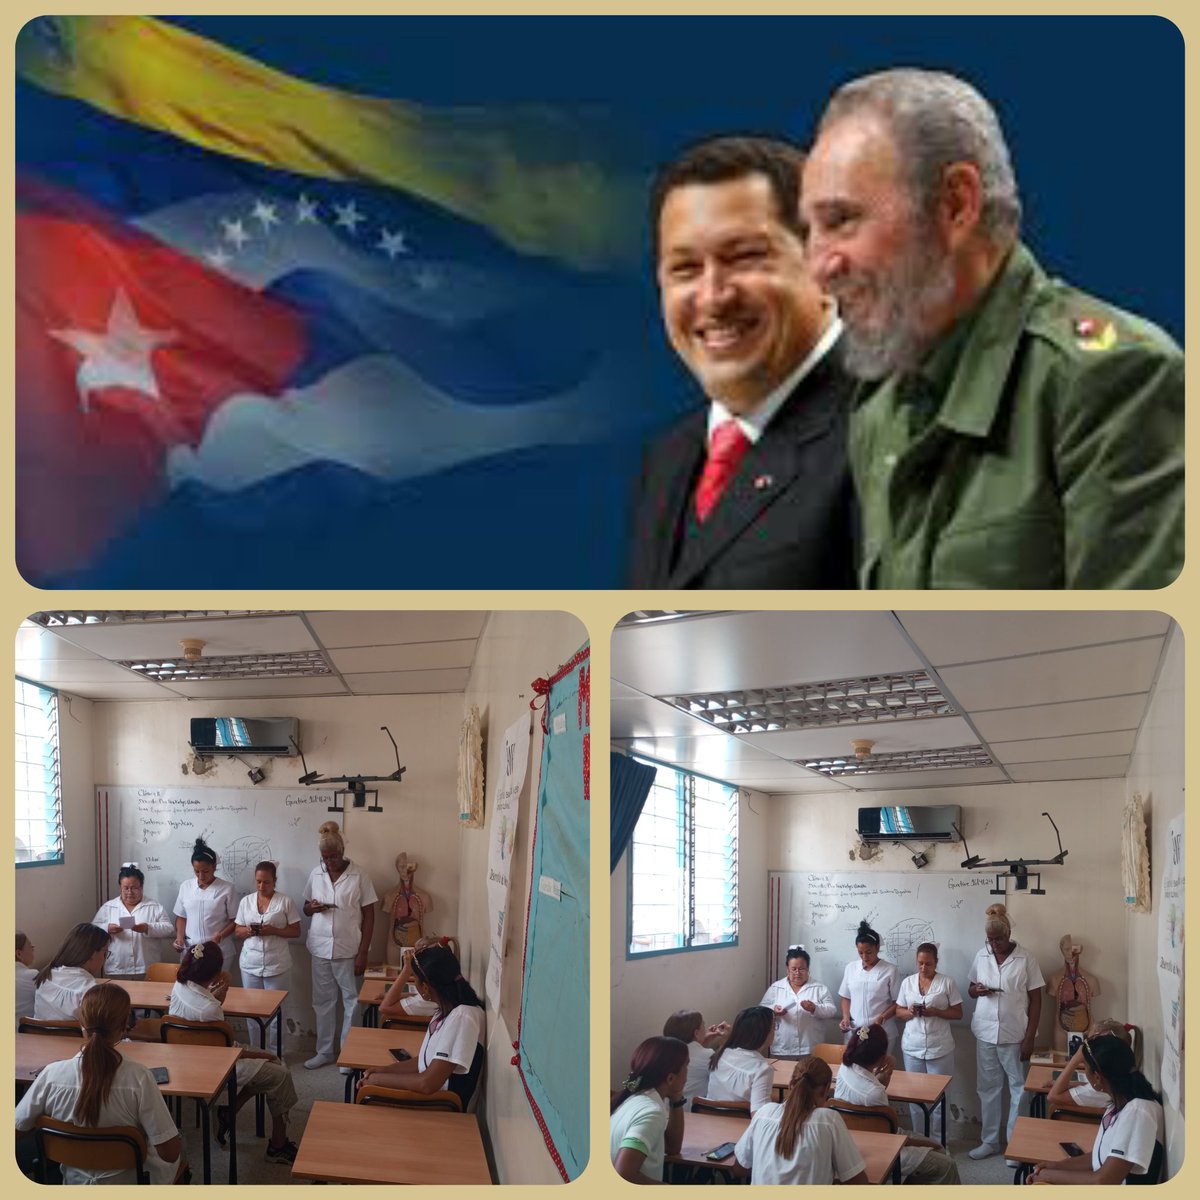 #FidelPorSiempe 
#ChavezVive